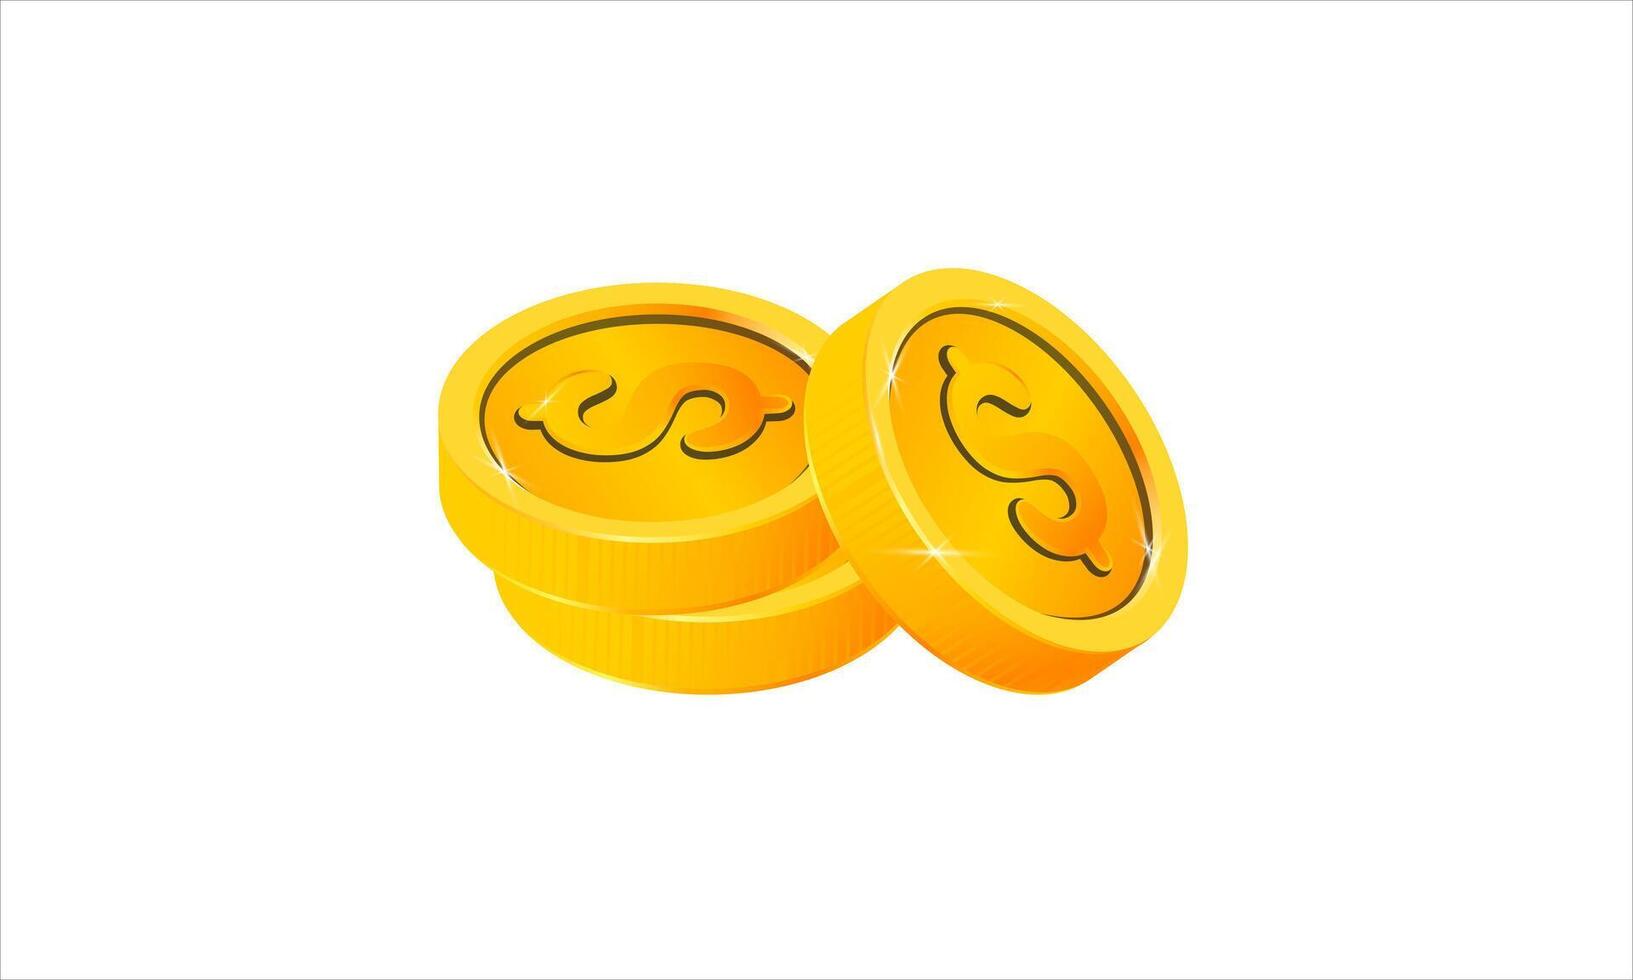 3d illustration golden coin on isolated white background Vector illustration